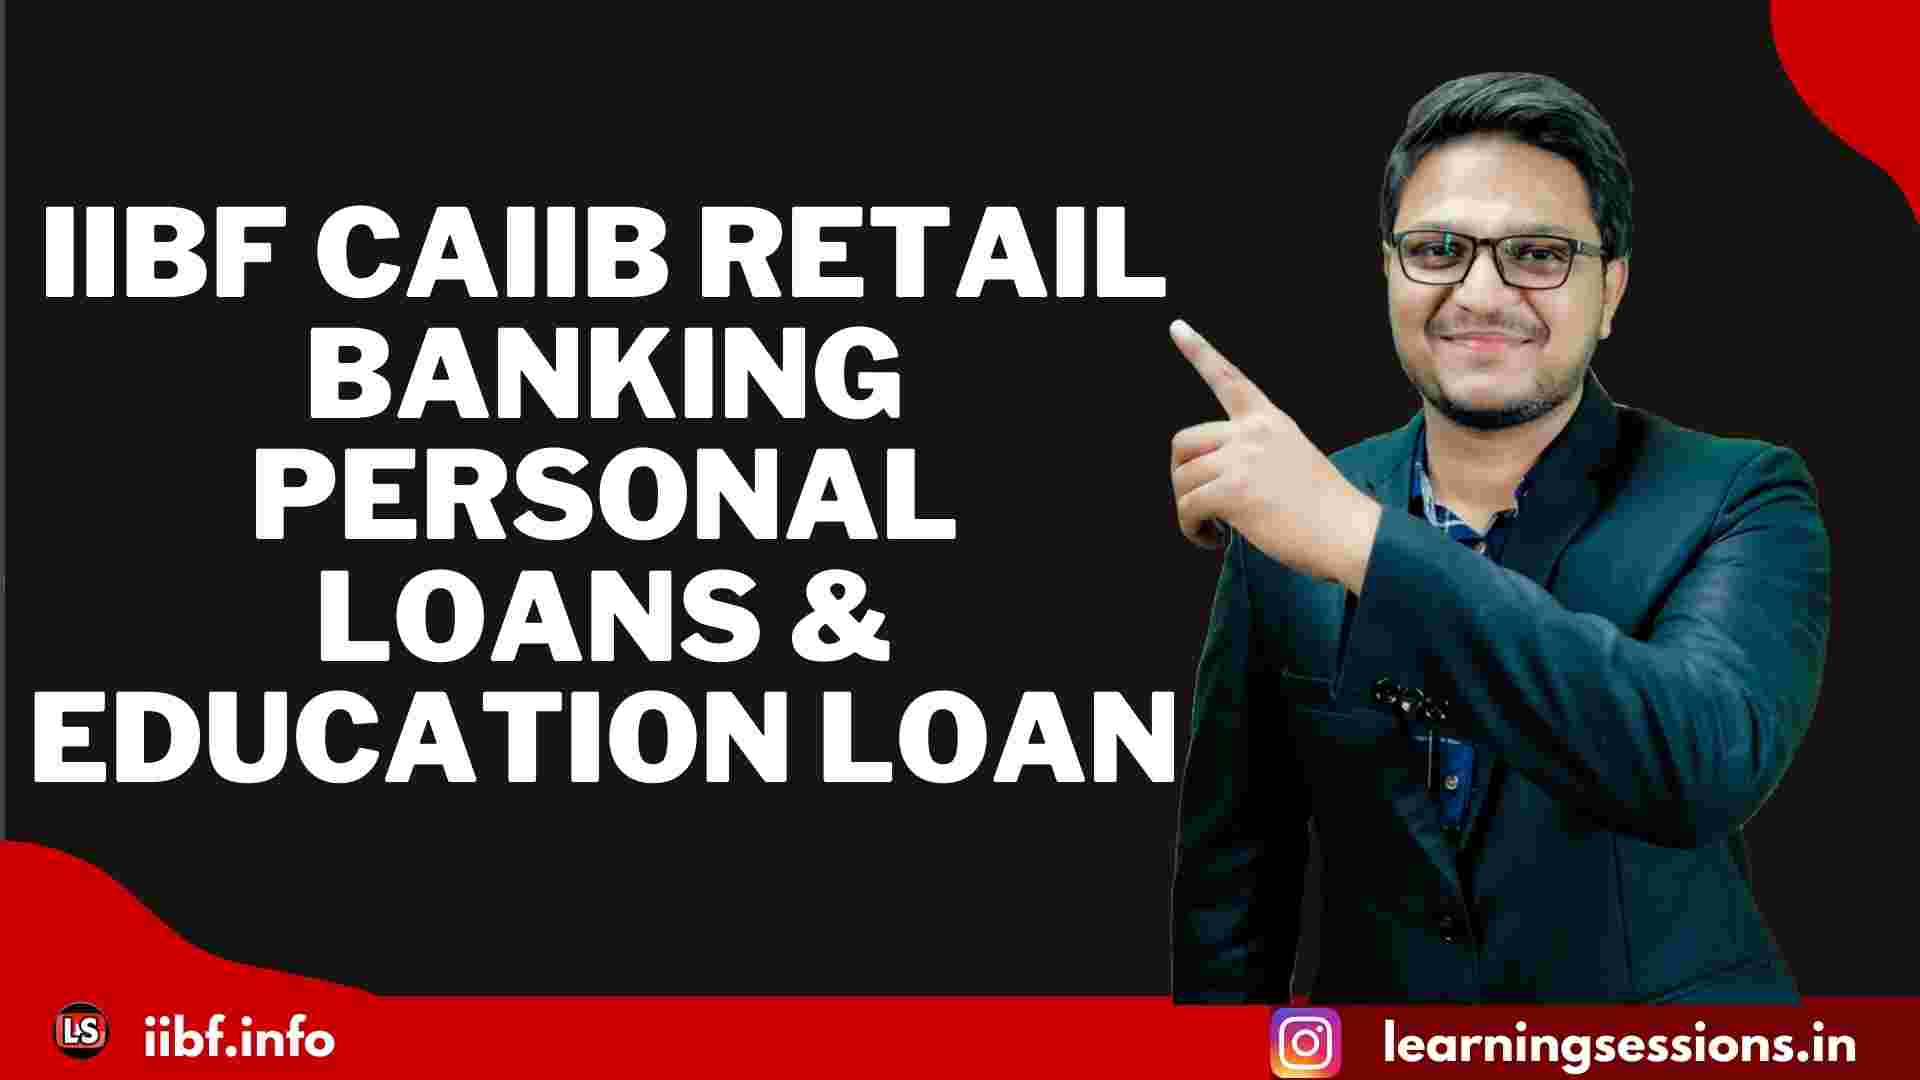 IIBF CAIIB RETAIL BANKING | PERSONAL LOANS & EDUCATION LOAN